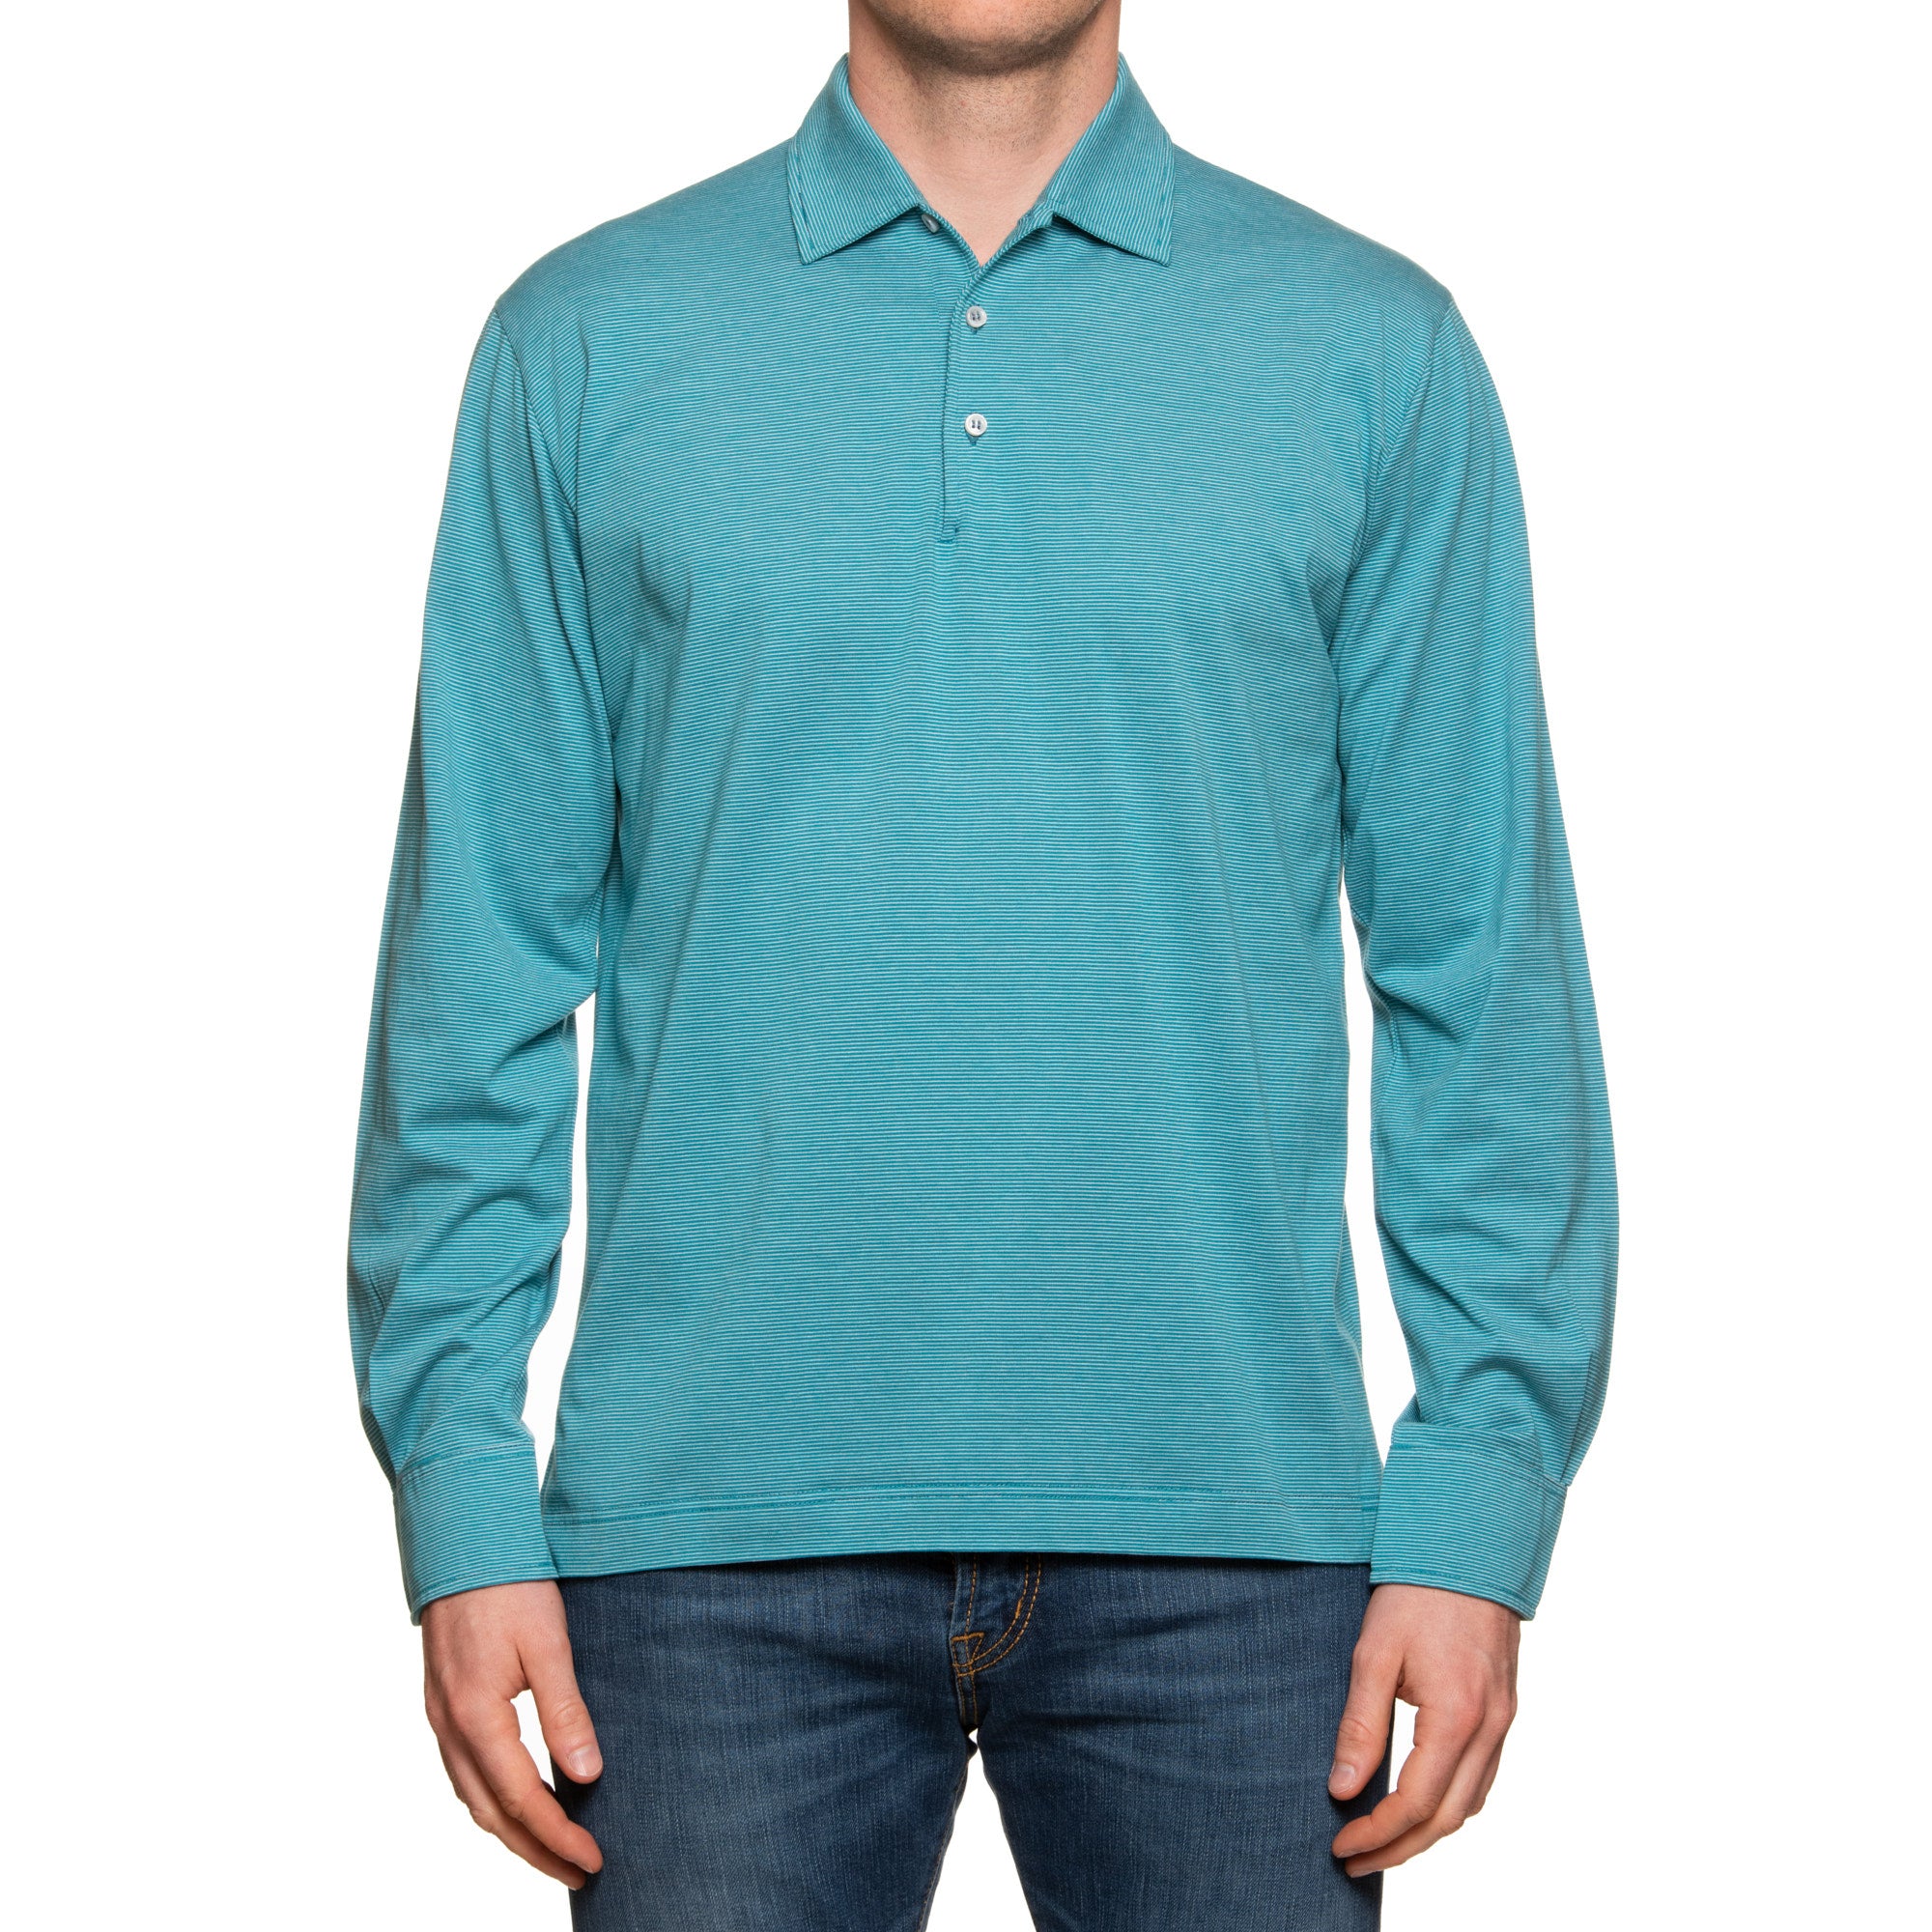 FEDELI "Libeccio" Blue Striped Cotton Jersey Long Sleeve Polo Shirt EU 54 NEW US XL FEDELI